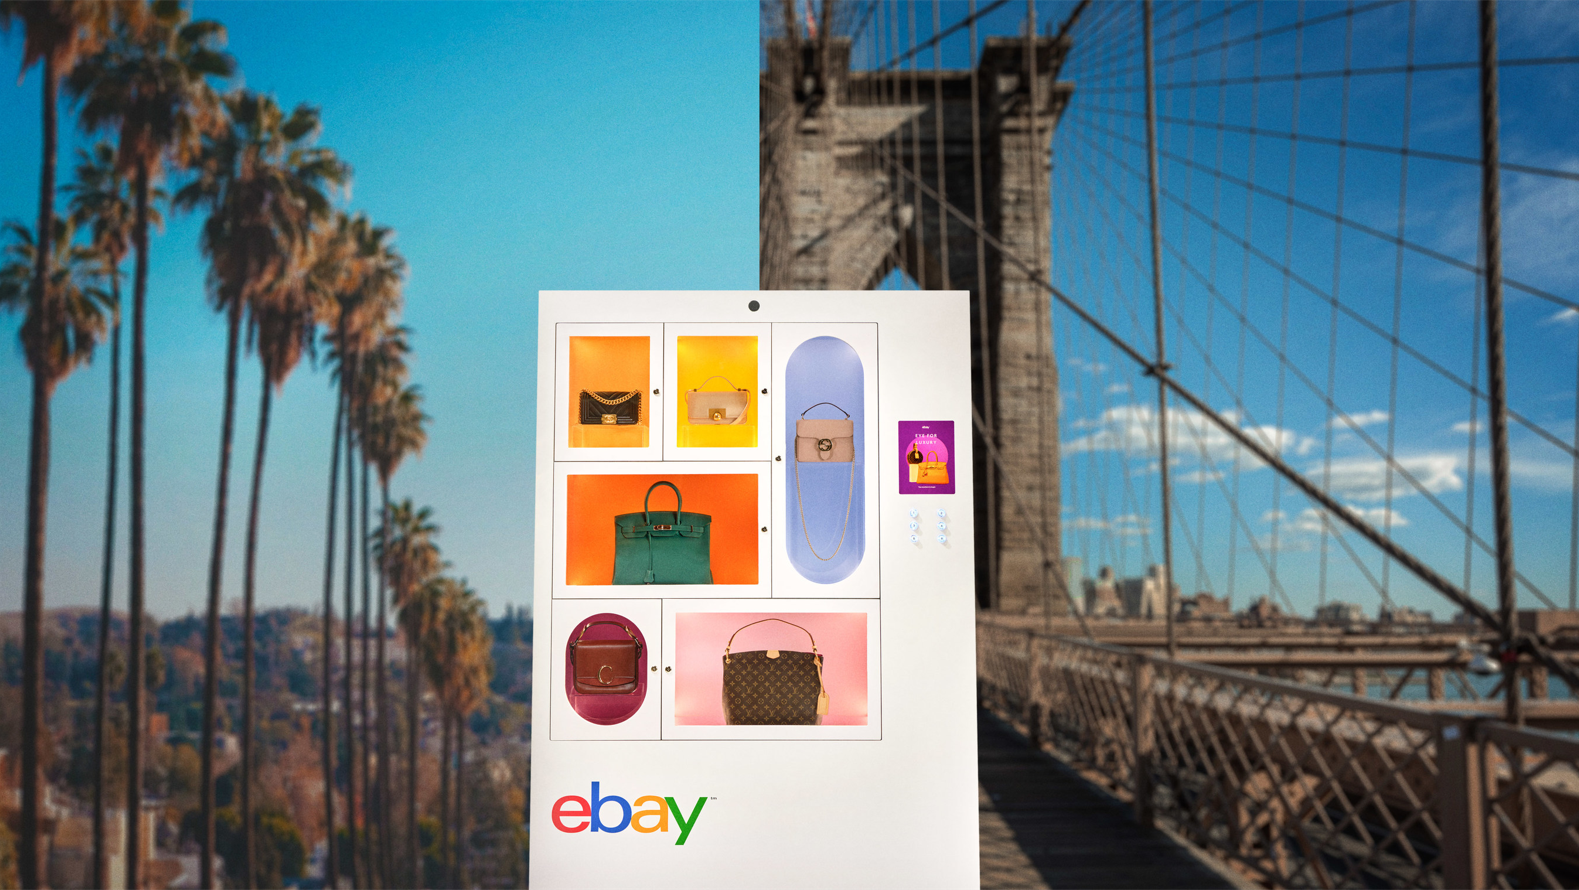 Ebay 推出首个奢侈品手袋自动贩卖机